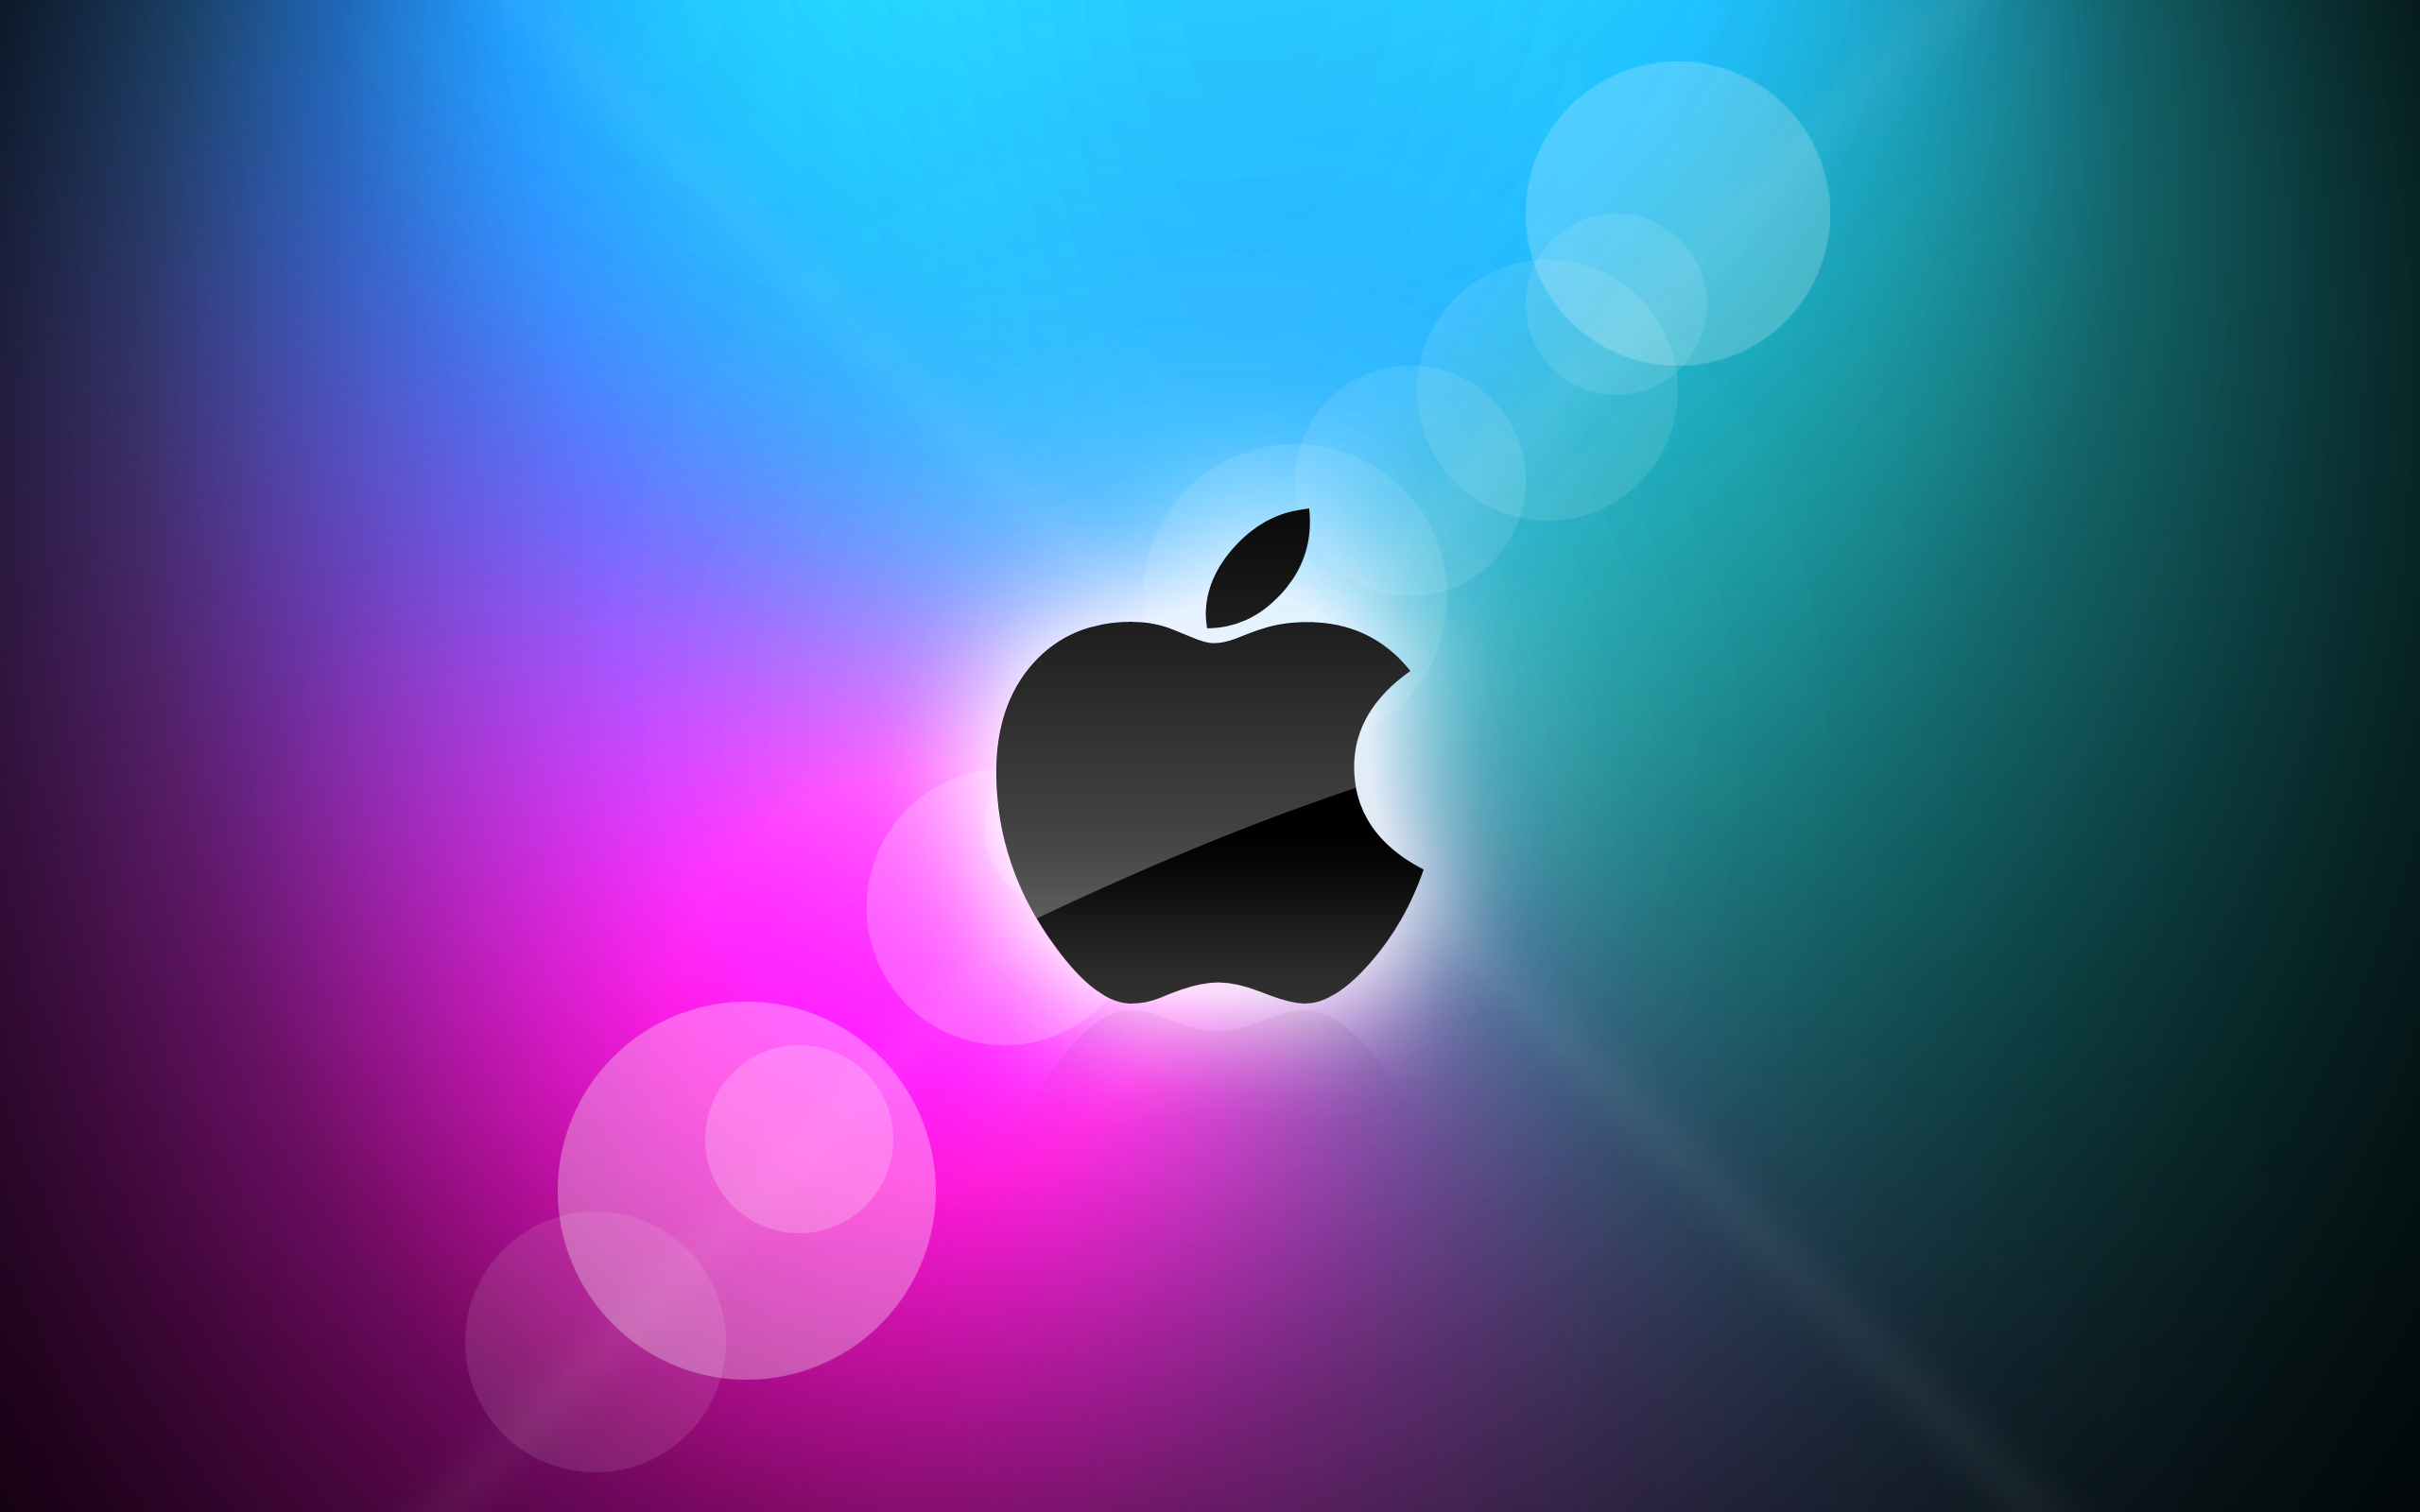 Image for Apple Mac HD Wallpaper Download Apple Mac Wallpaper 2560x1600